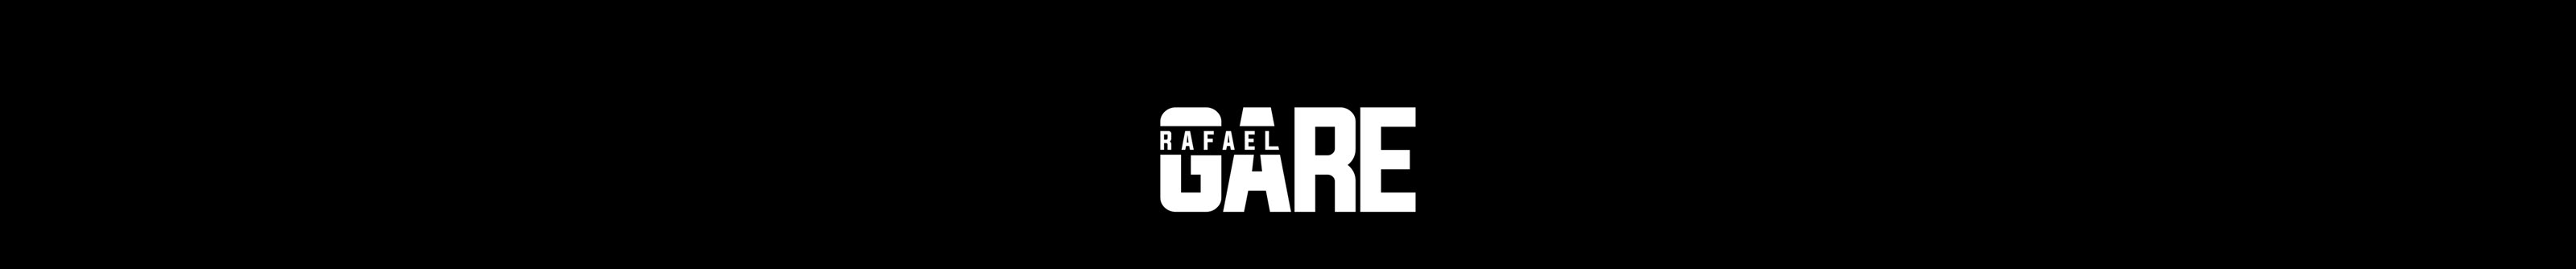 Rafael Garé 的个人资料横幅